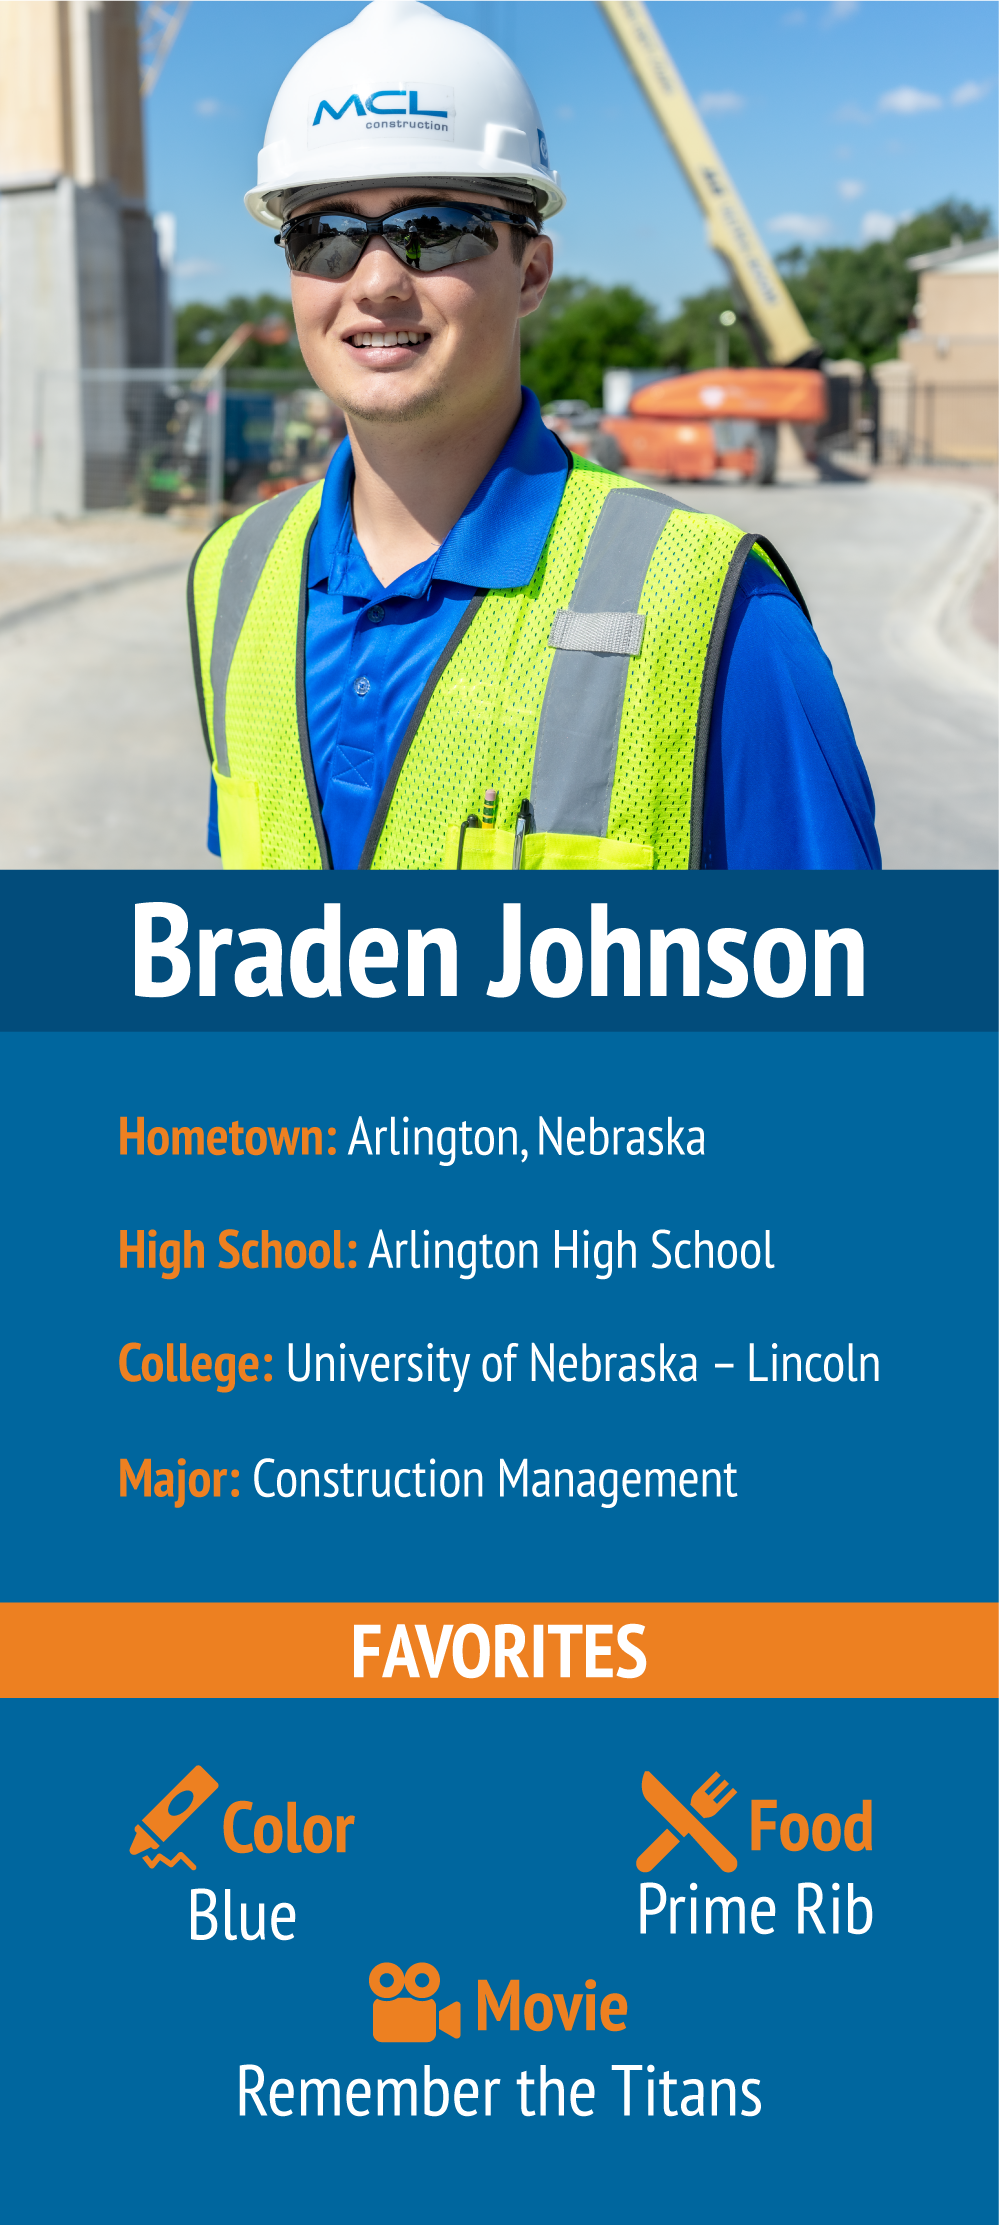 Braden Johnson MCL Construction